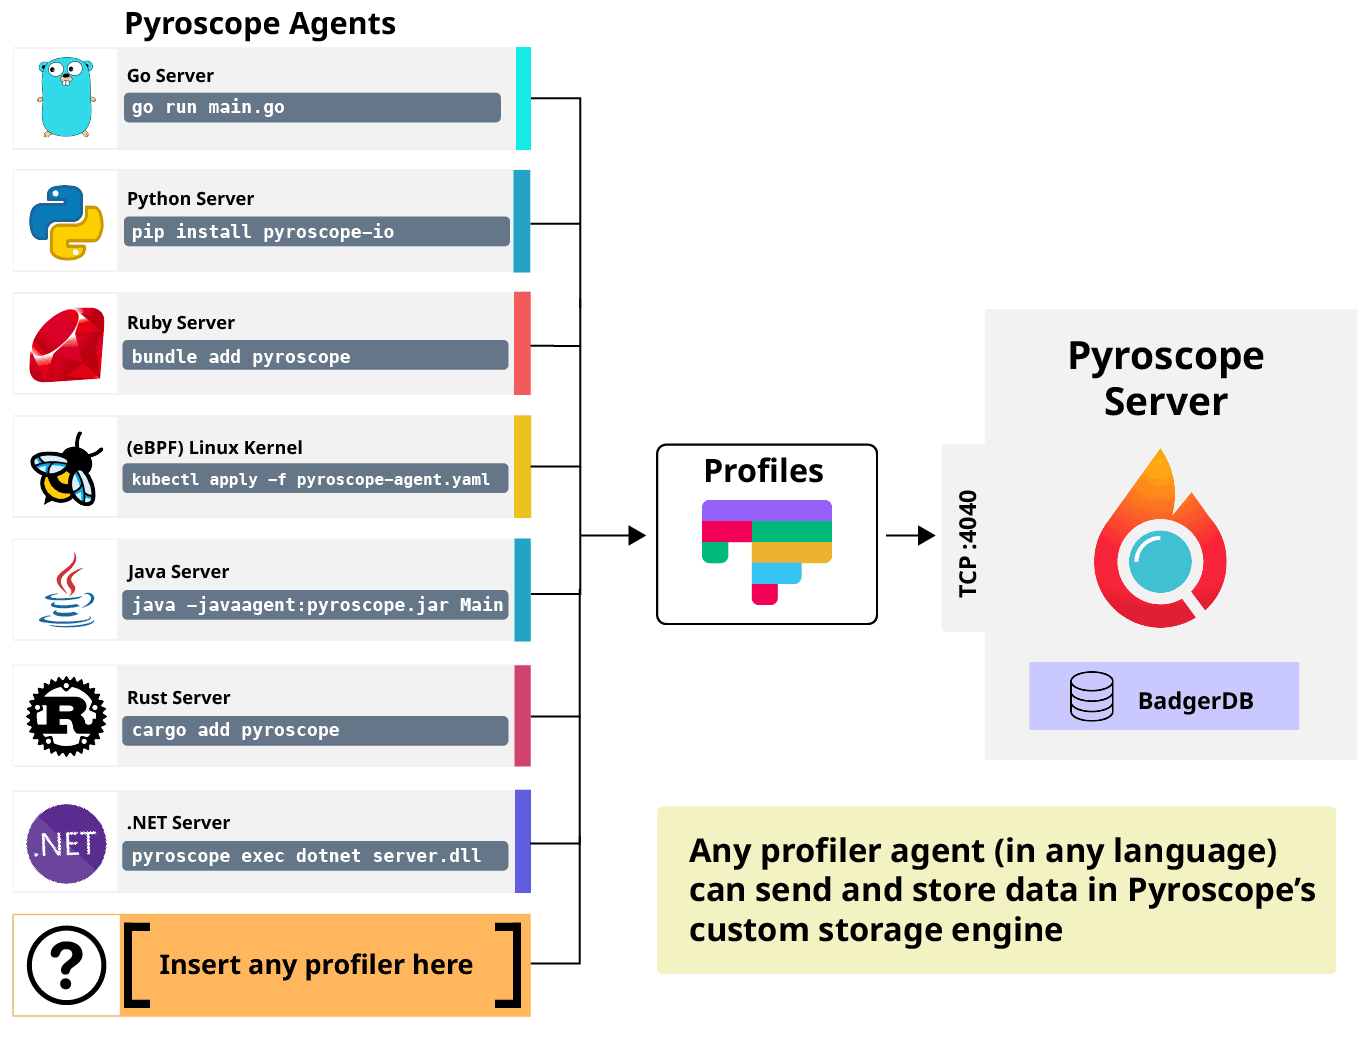 Diagram shows pyroscope agents -> profiles -> pyroscope server